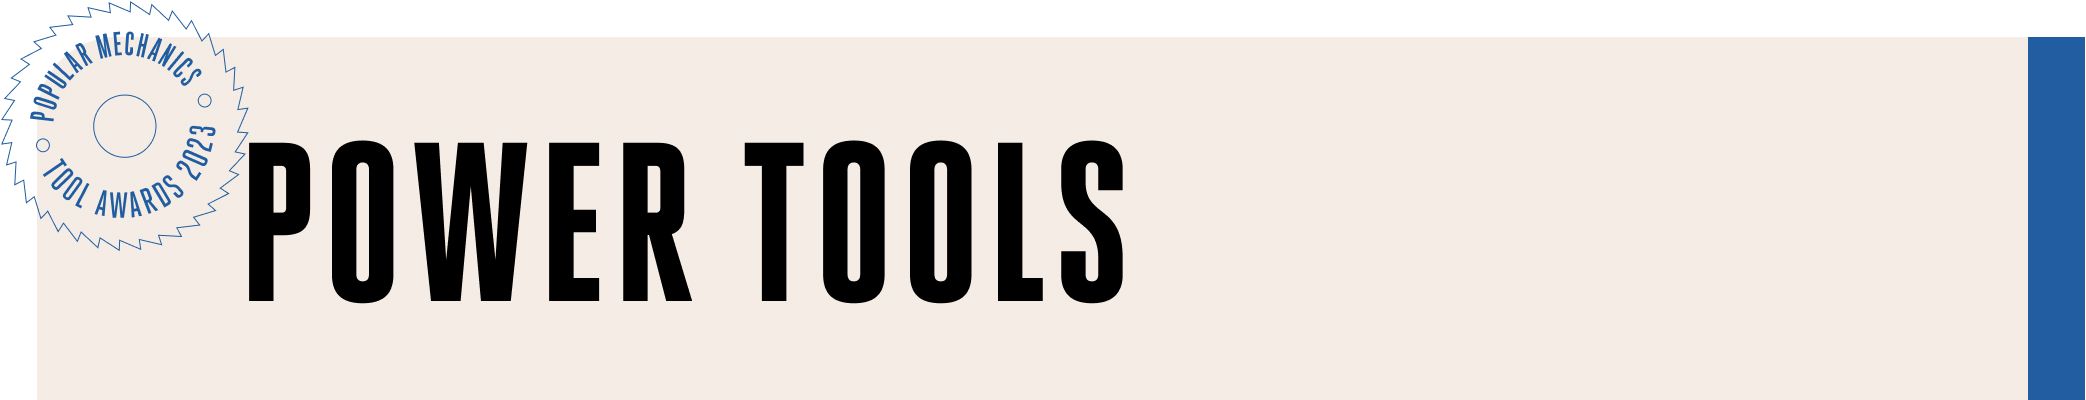 Best Tools 2023  Popular Mechanics Tool Awards 2023